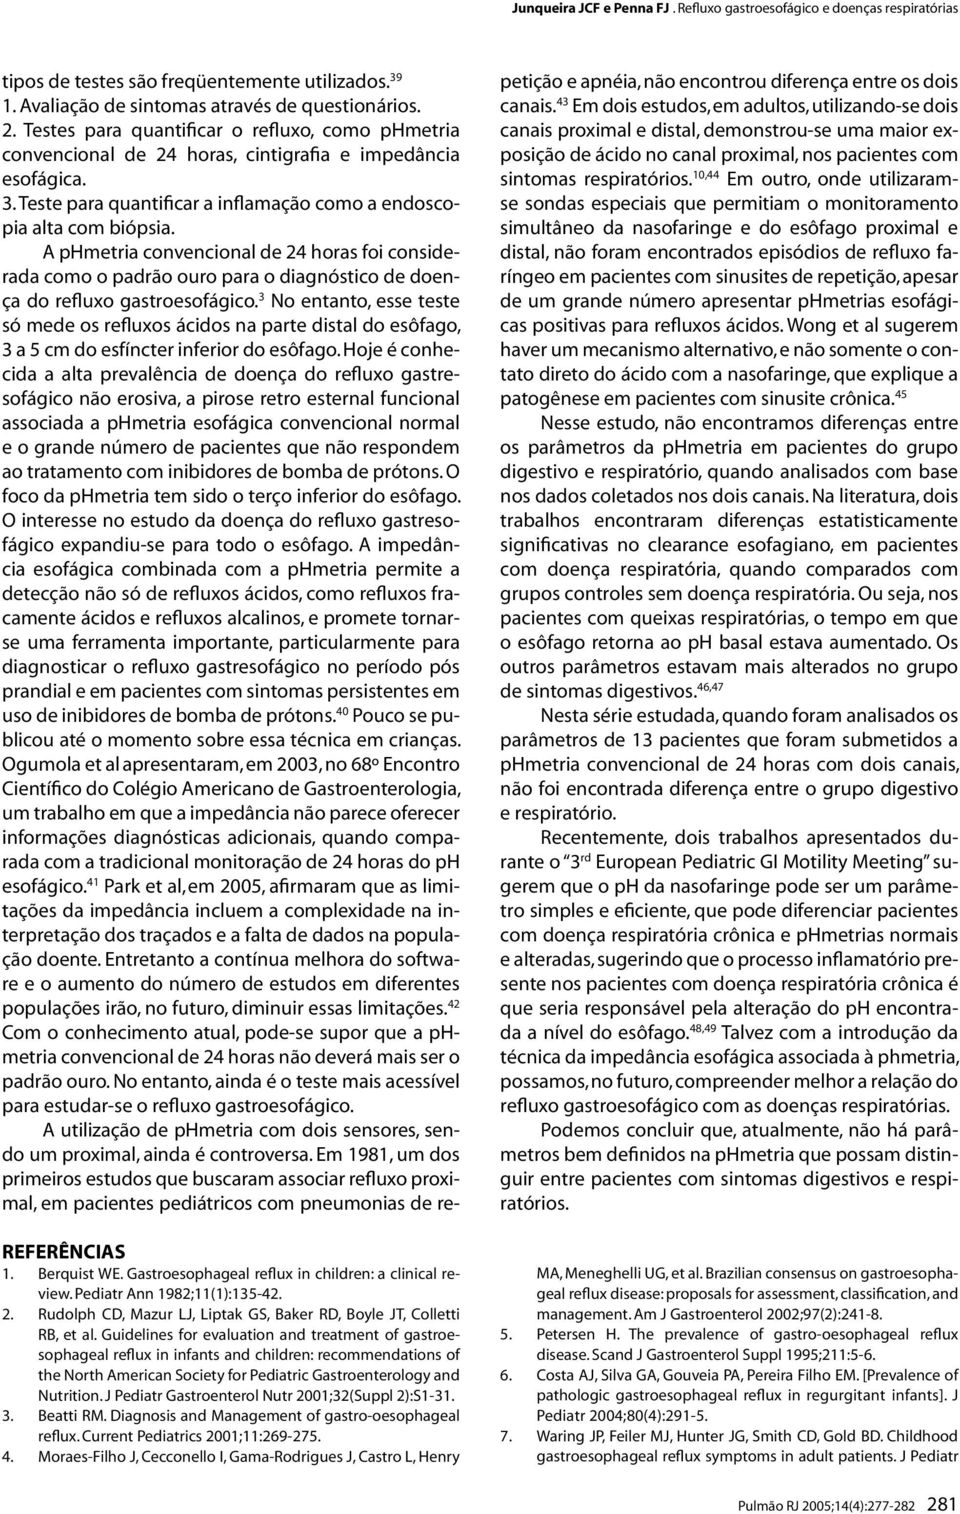 J Pediatr Gastroenterol Nutr 2001;32(Suppl 2):S1-31. 3. Beatti RM. Diagnosis and Management of gastro-oesophageal reflux. Current Pediatrics 2001;11:269-275. 4.